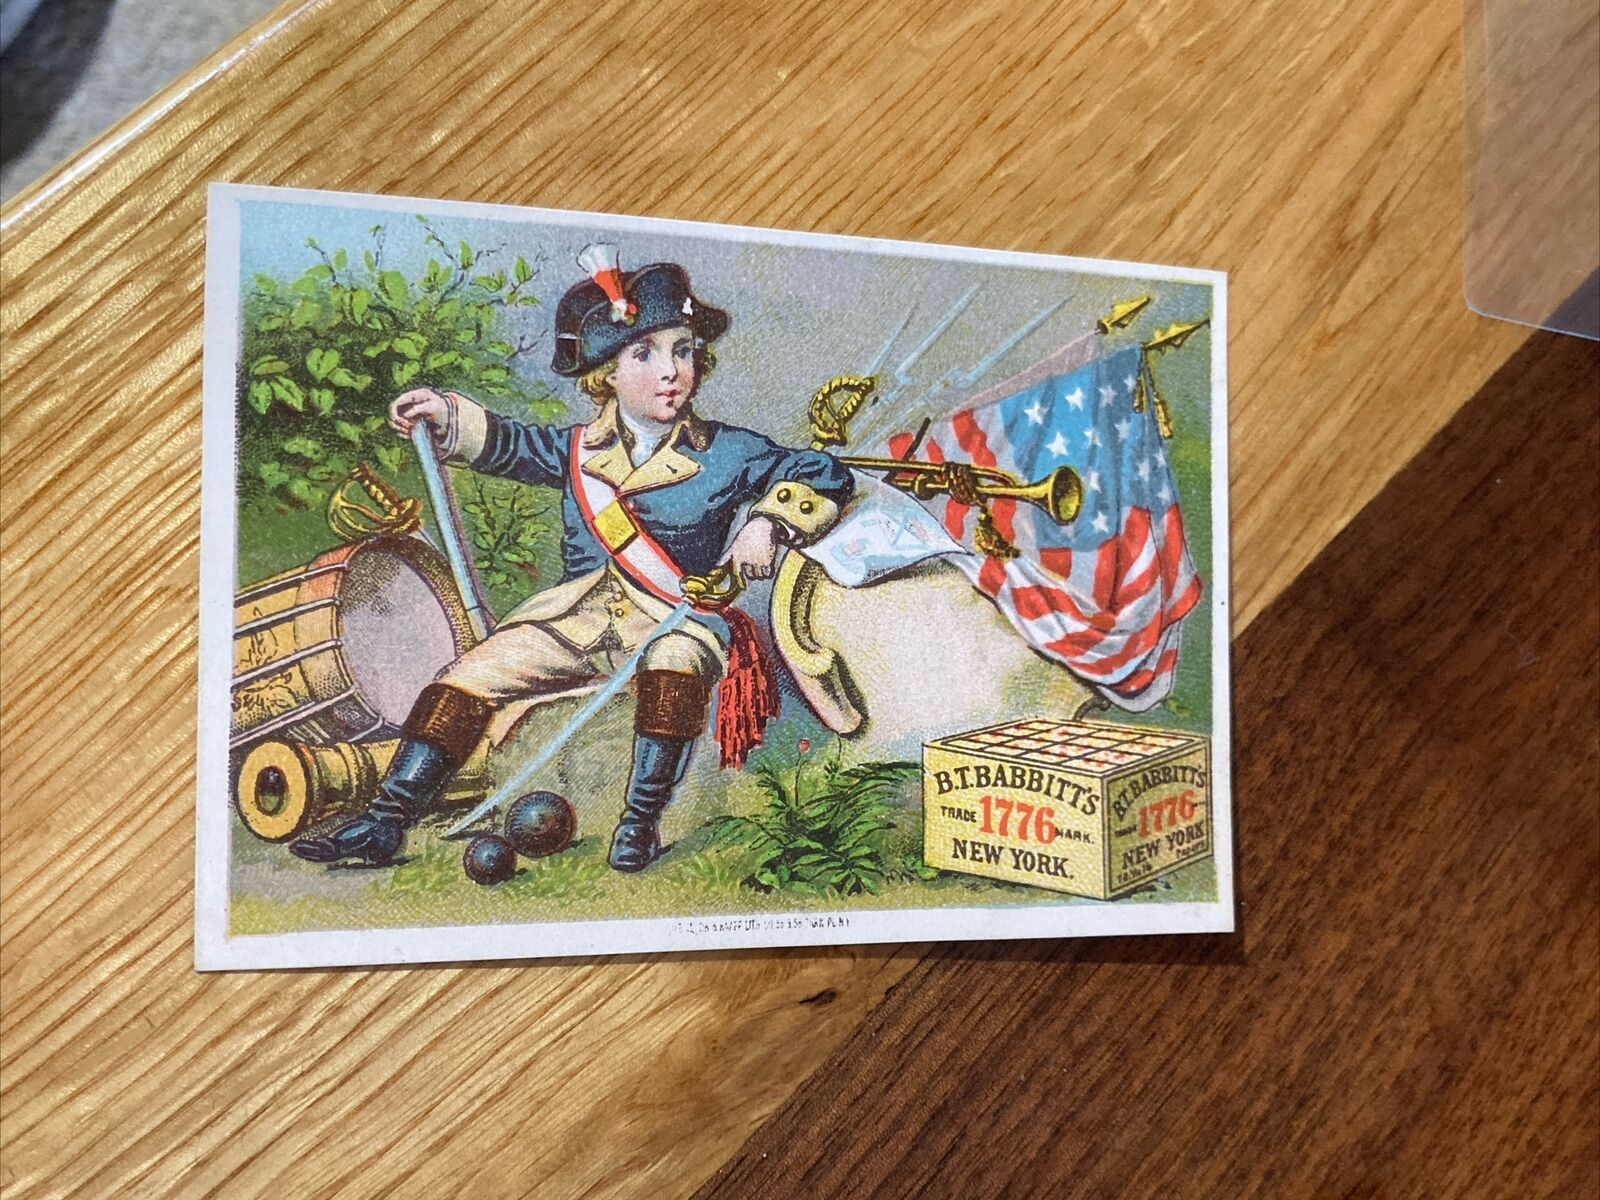 B T Babbitt soap trade card acrostic poem American Revolution soldier flag. P44